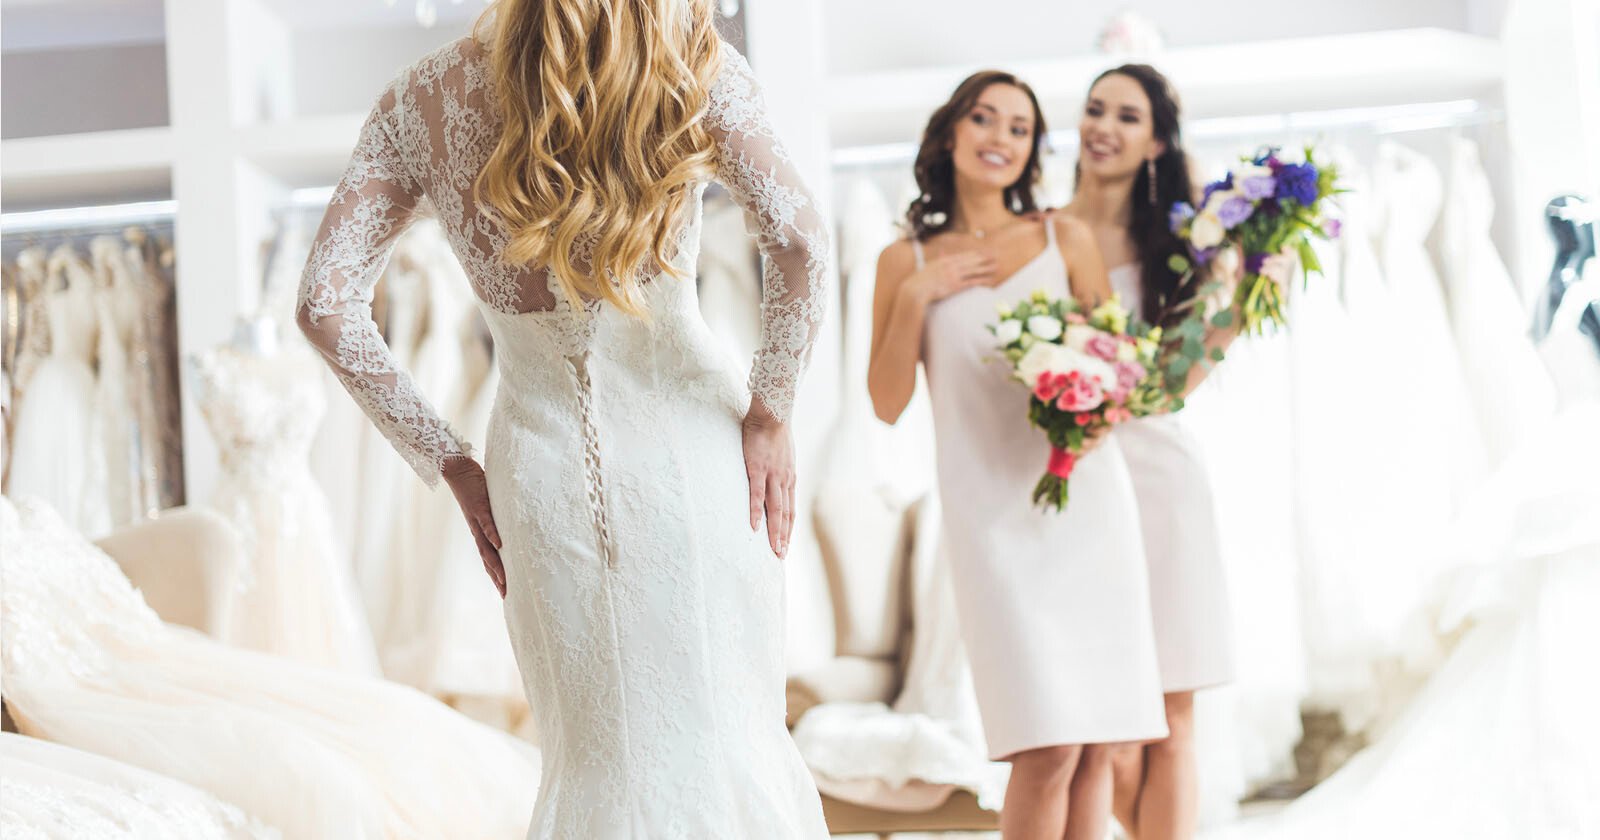  mom enraged after bride photoshops daughter white dress 